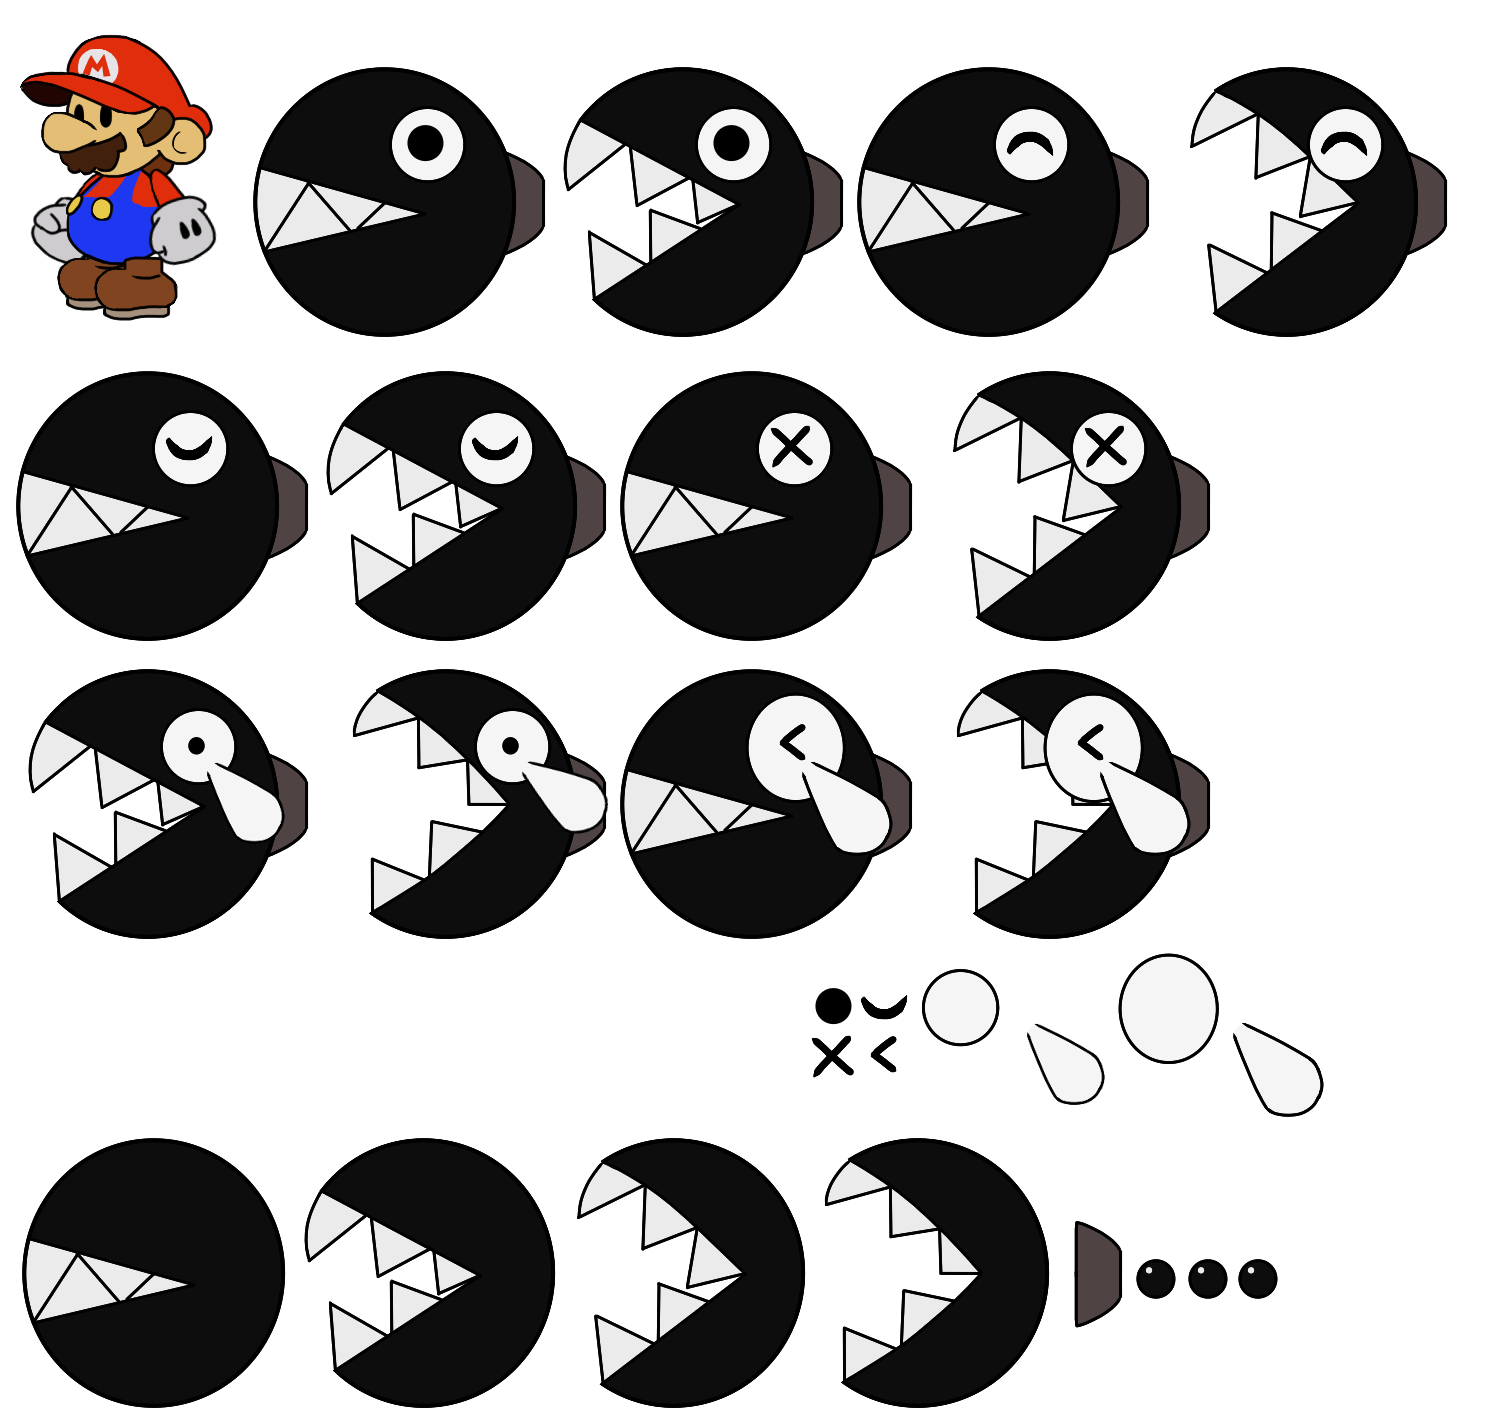 Mario Customs - Chain Chomp (Paper Mario-Style, Modern)